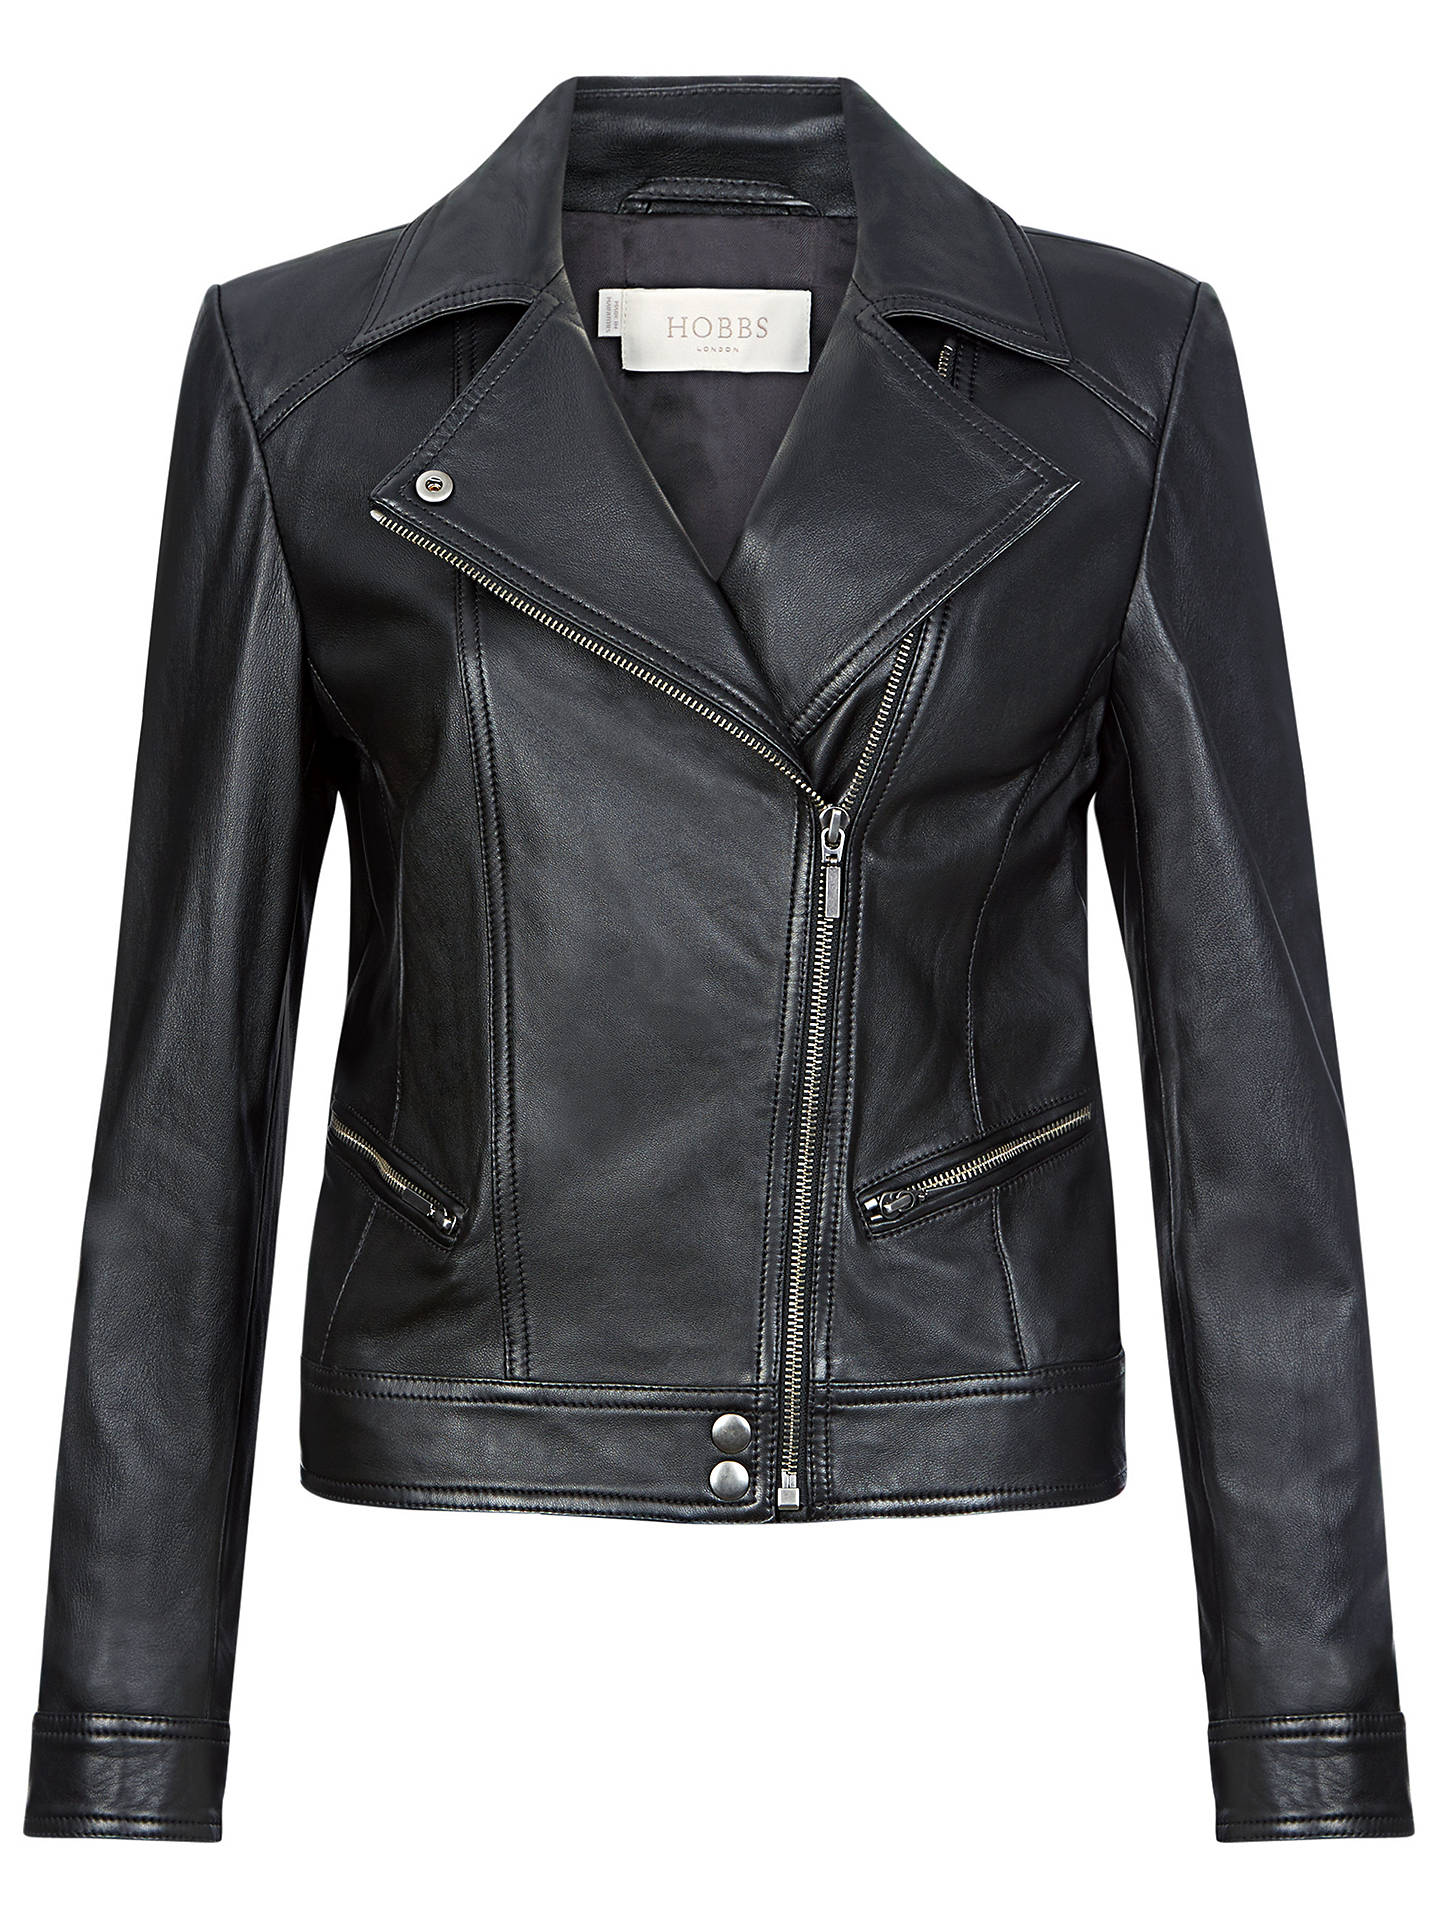 Hobbs Yasmine Leather Biker Jacket, Black at John Lewis & Partners